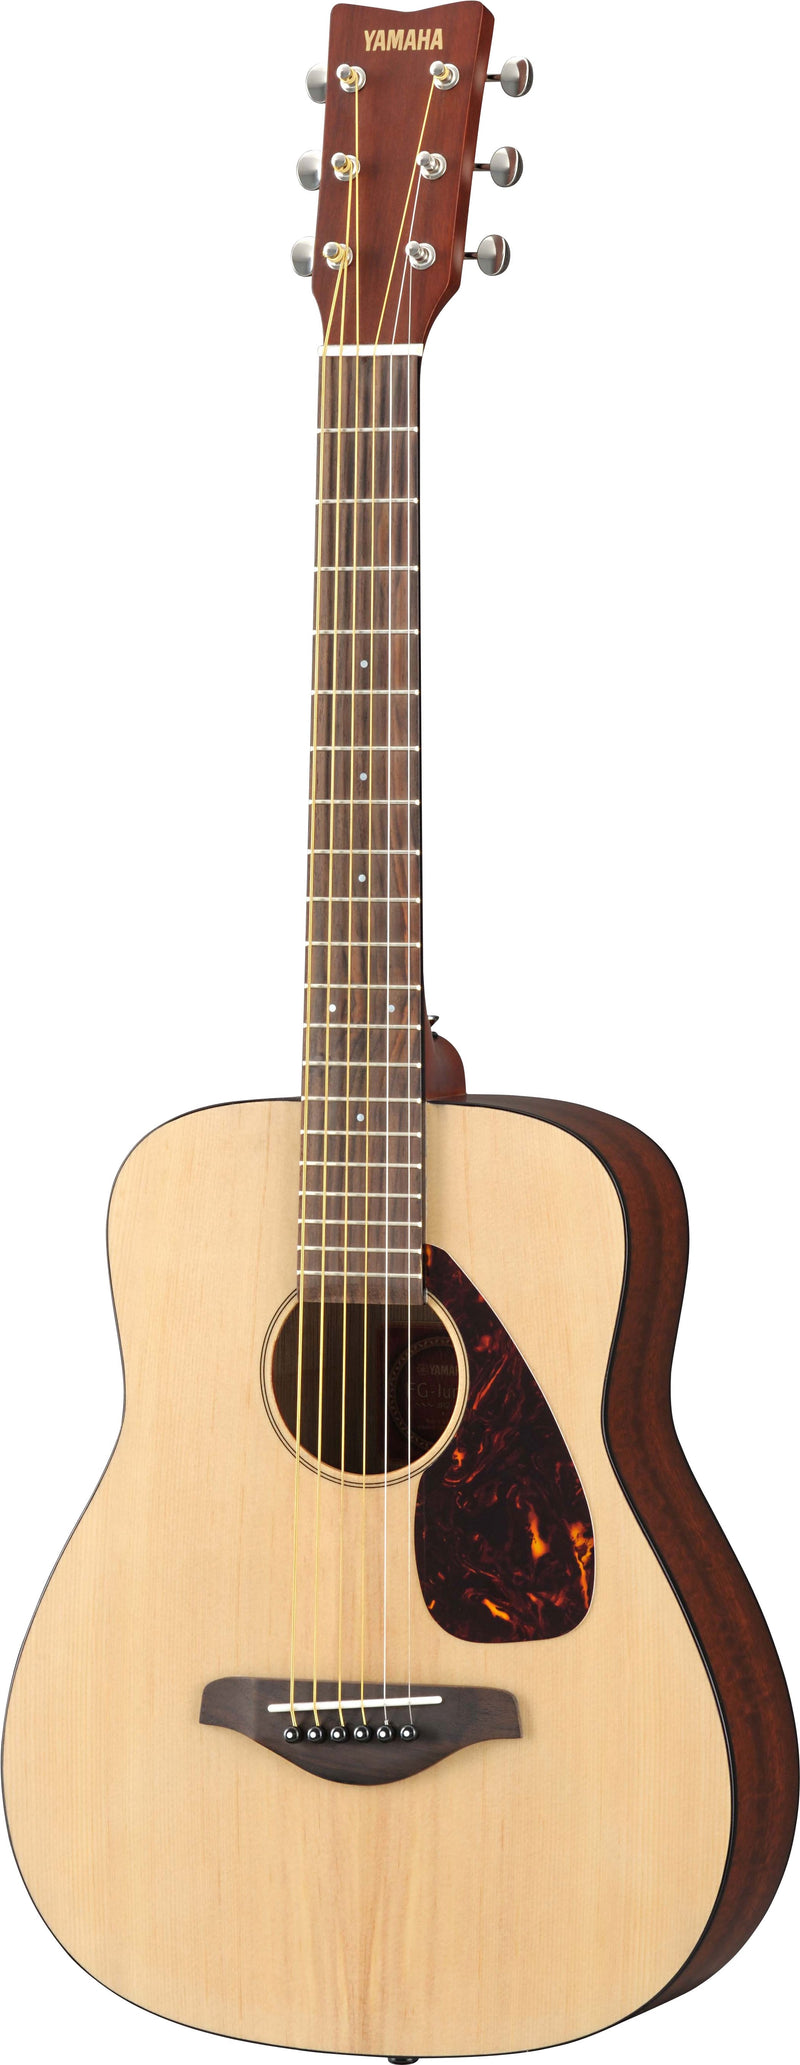 Yamaha JR2 Small Scale Acoustic Guitar